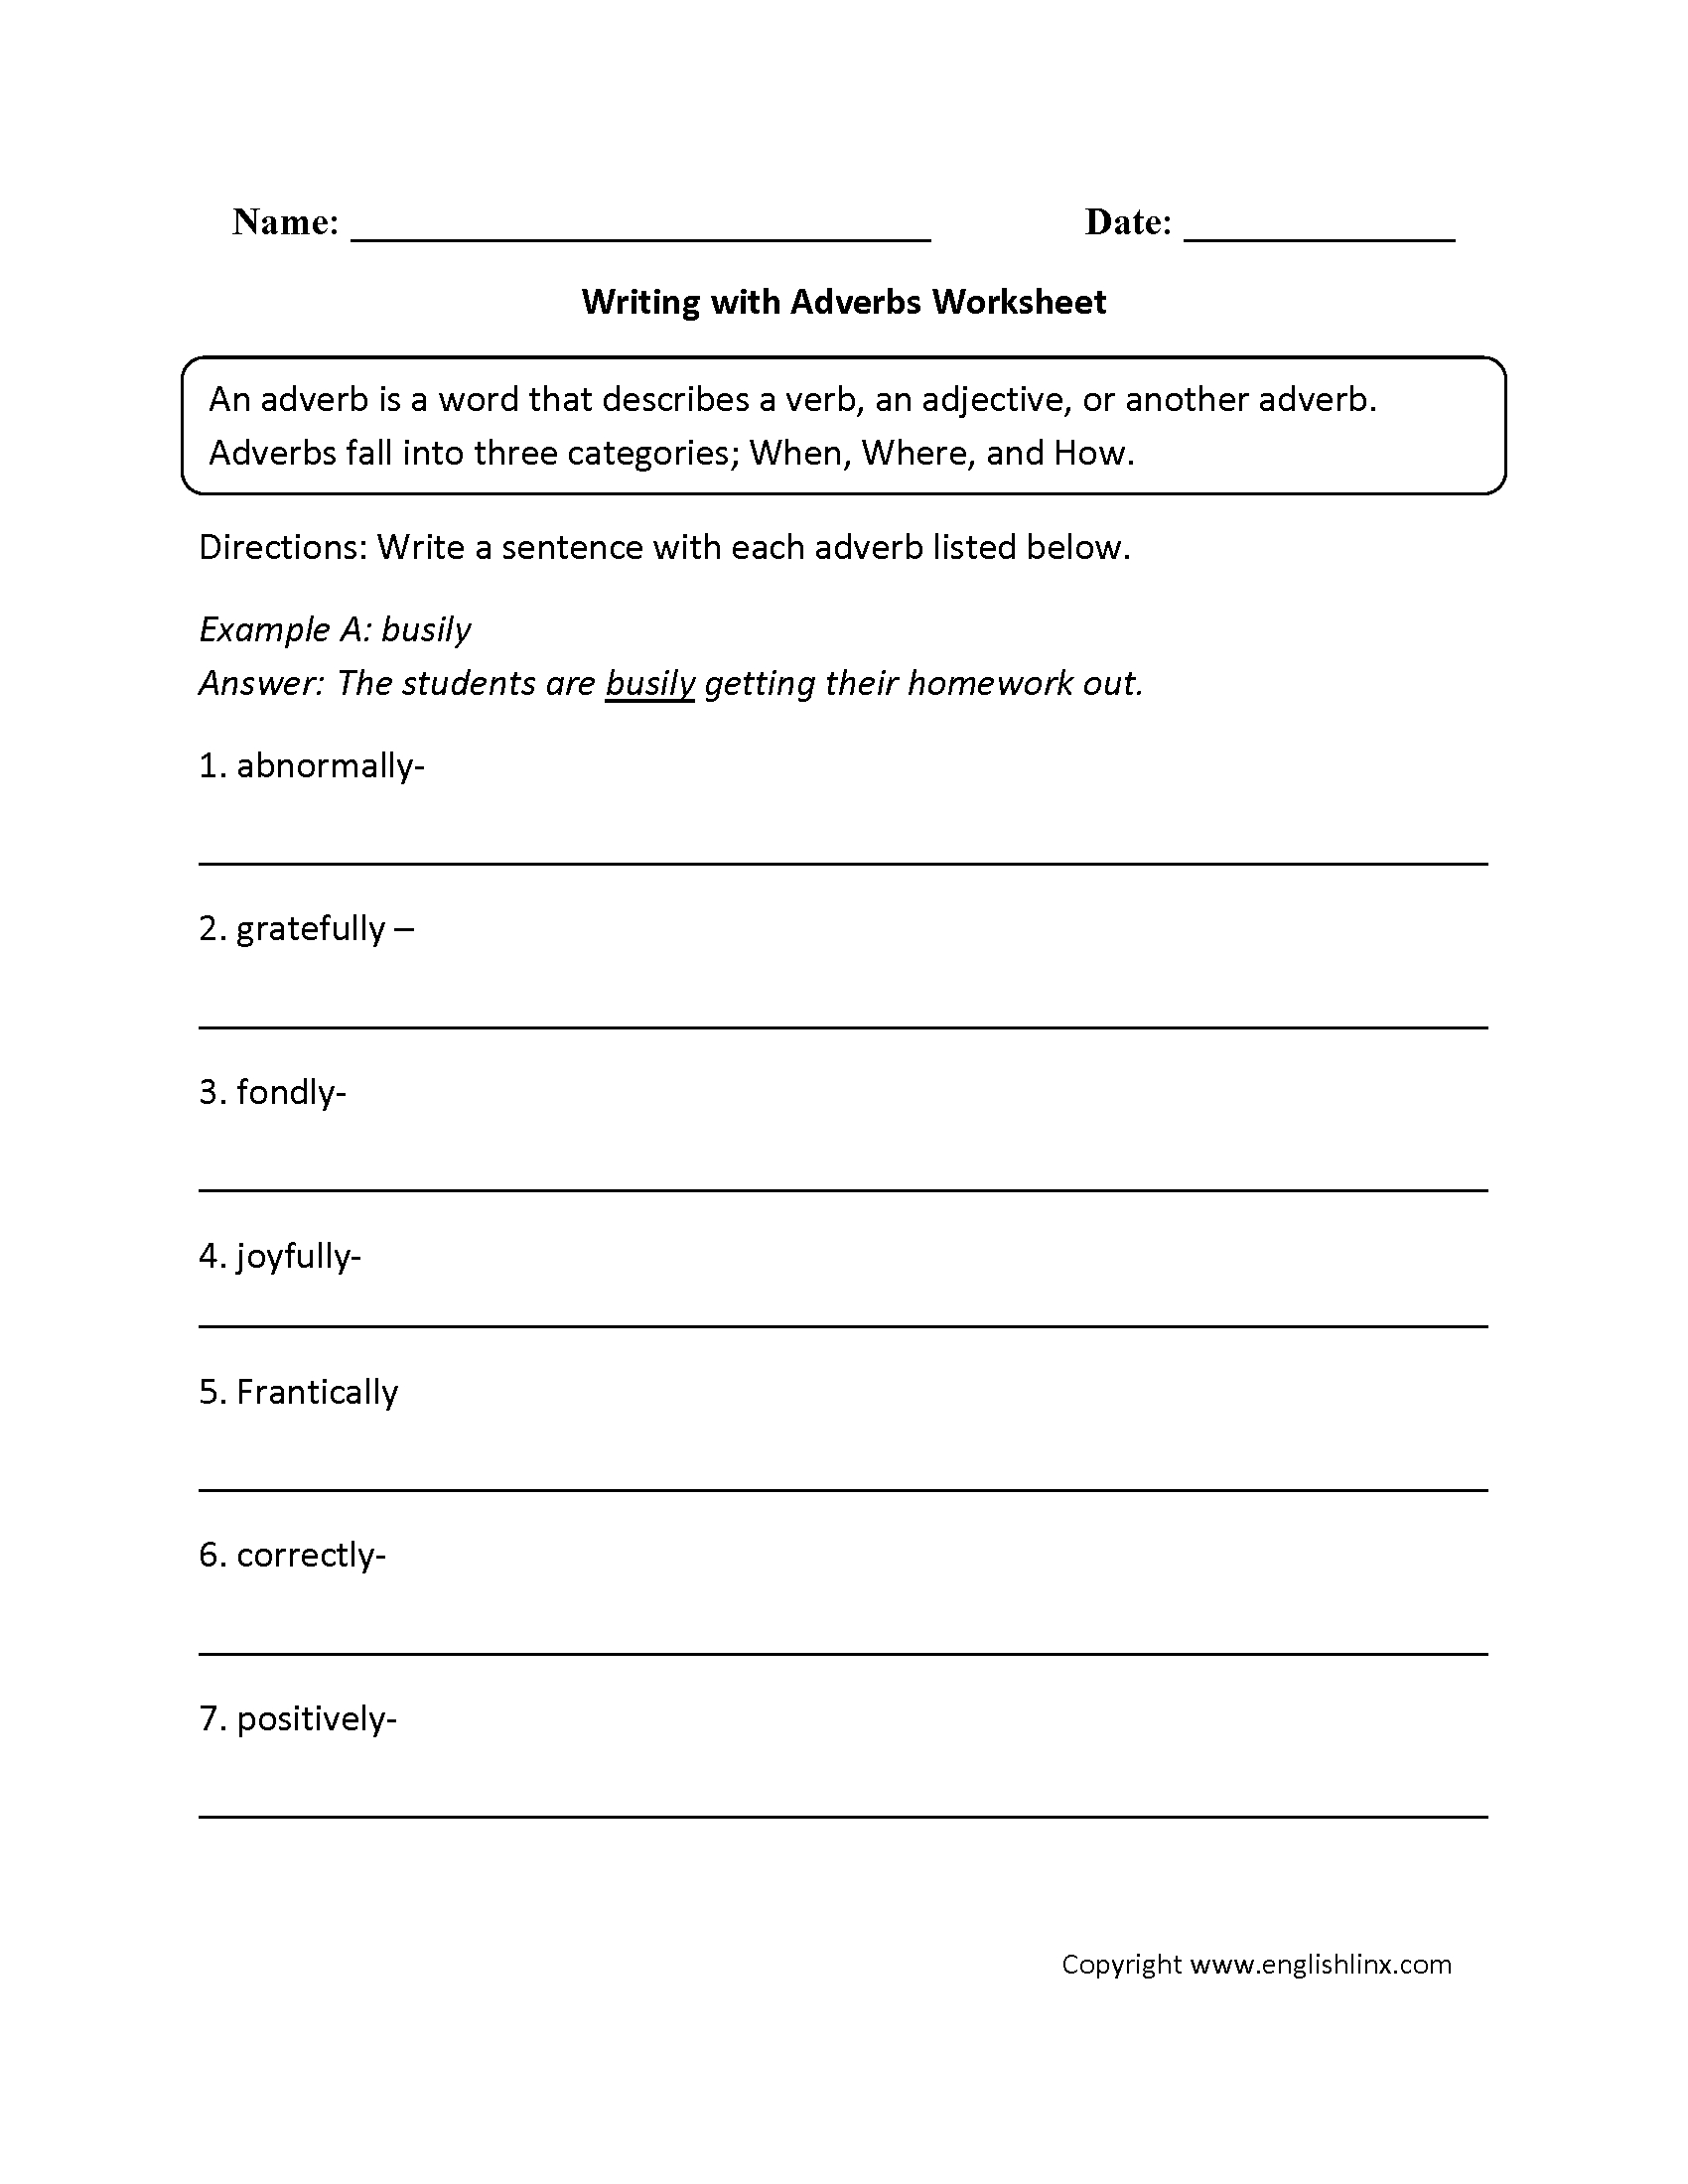 adverbs-online-worksheet-and-pdf-adverbs-education-world-sharon-killion